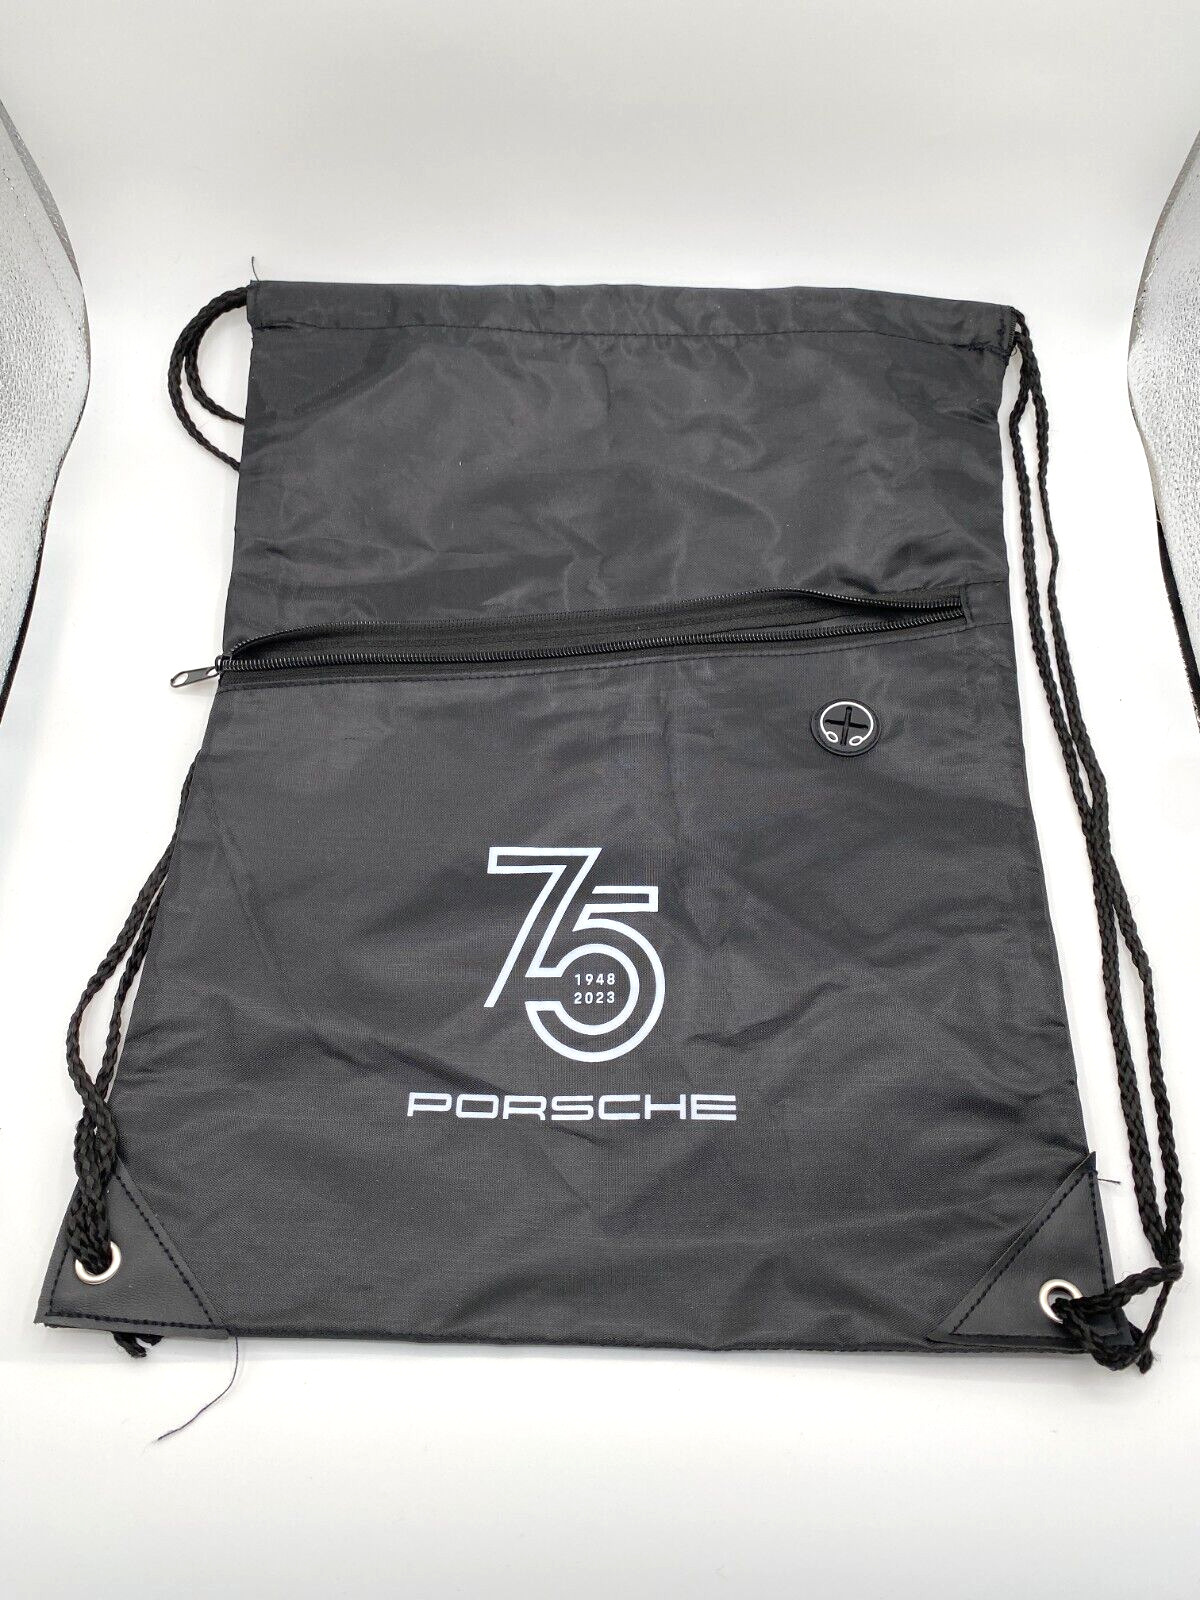 Porsche 75th Anniversary Black Draw String Bag Rennsport Reunion 7 2023 FreeShip